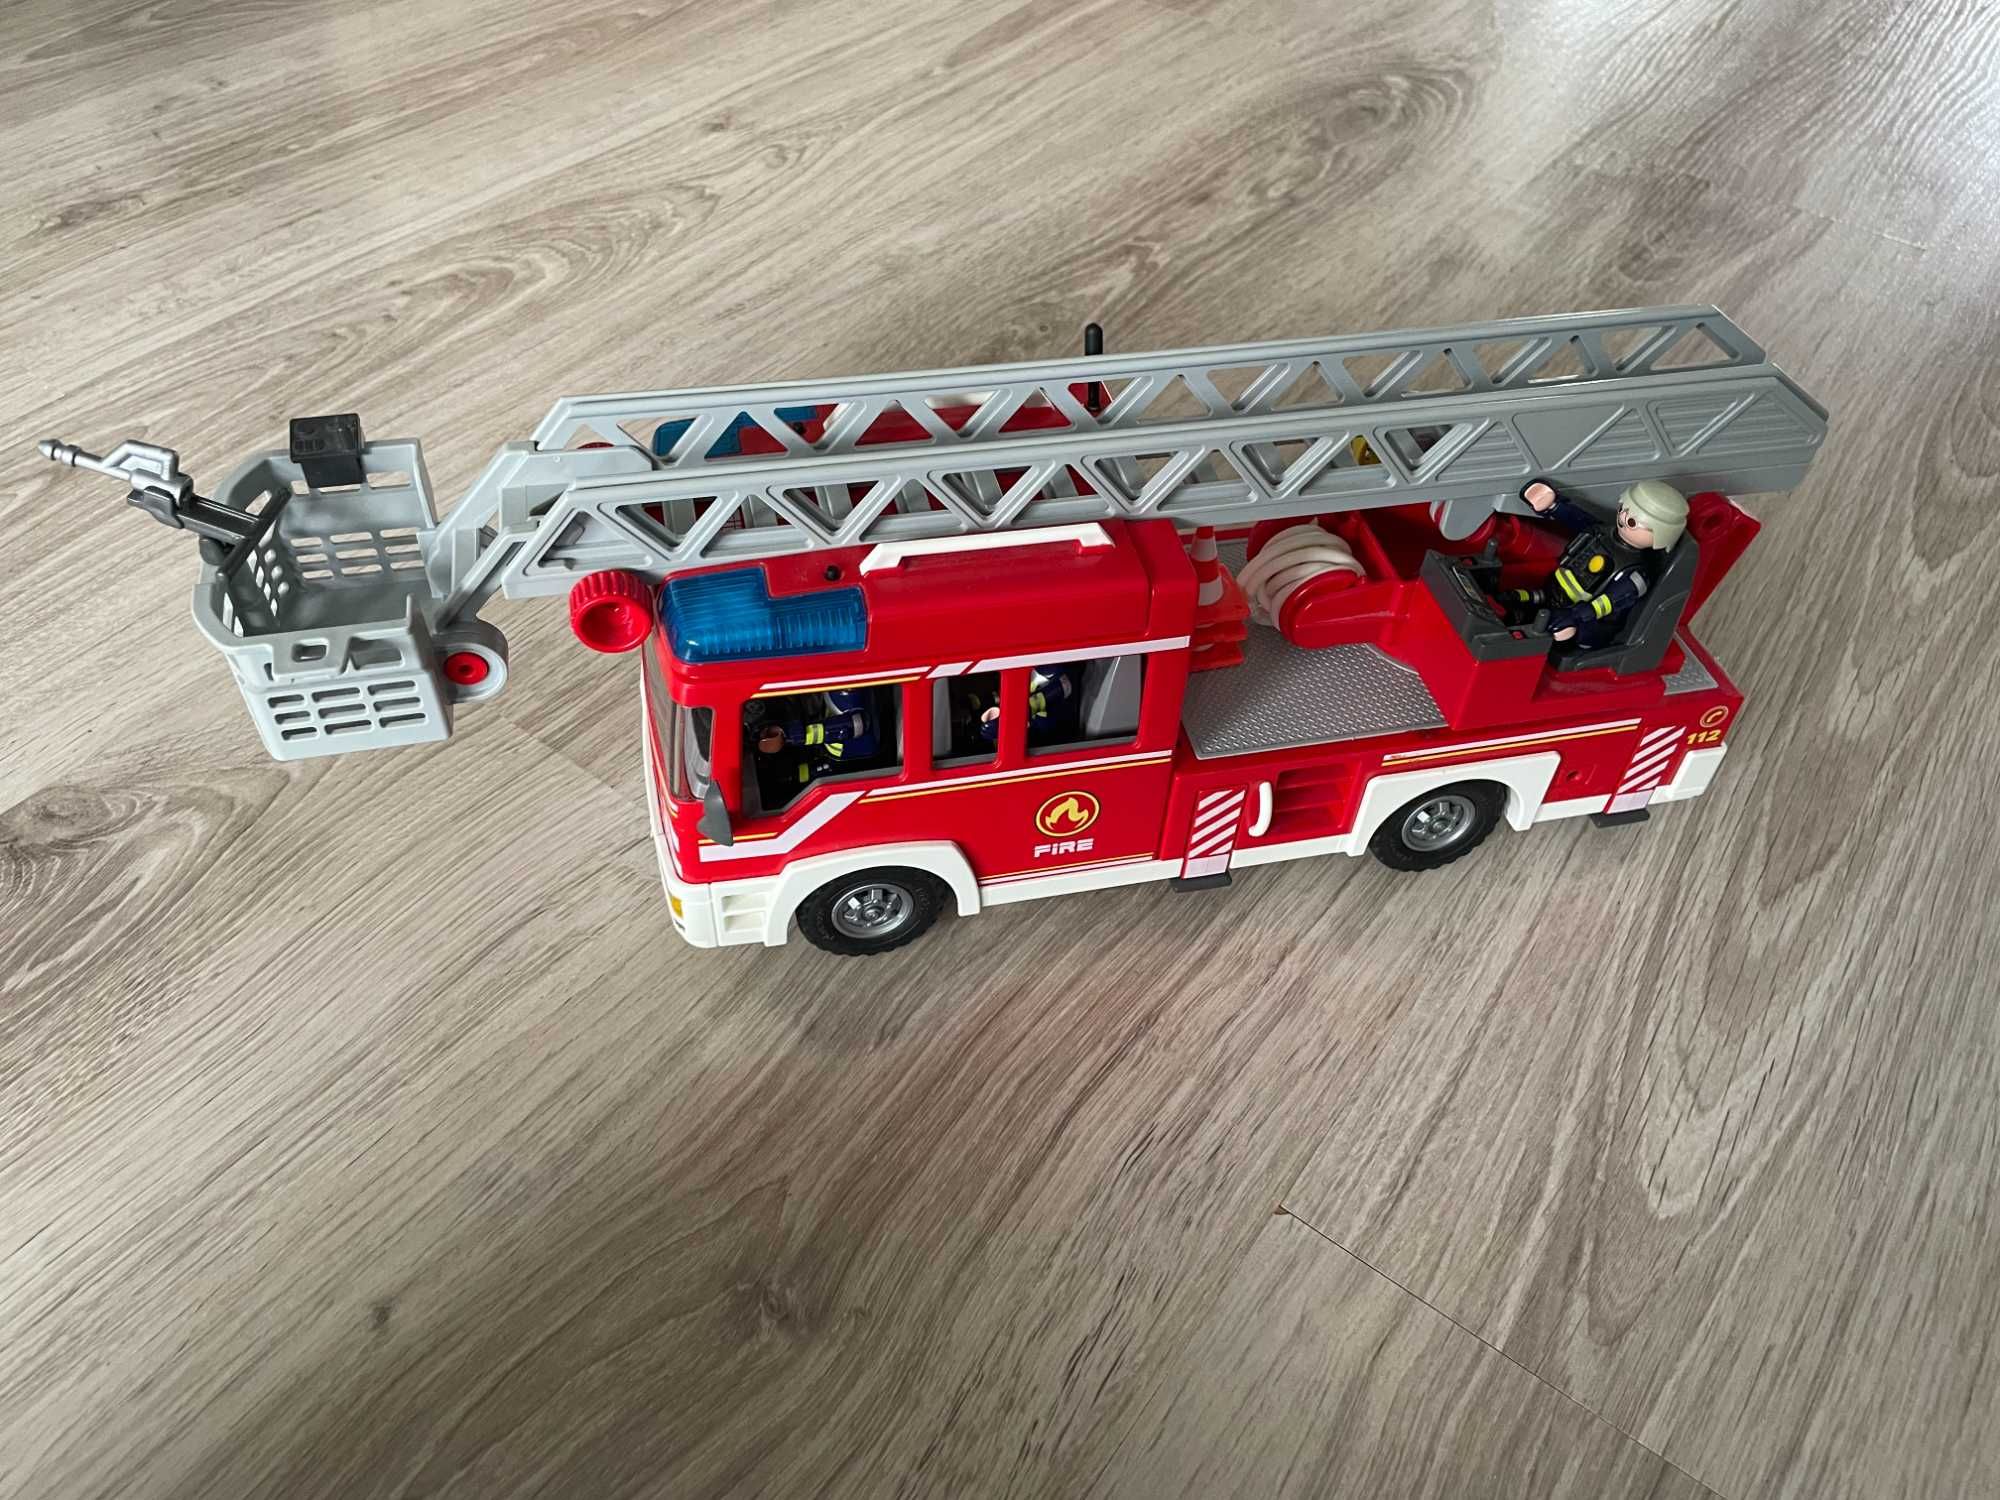 PLAYMOBIL, Samochód strażacki z drabiną, 9463